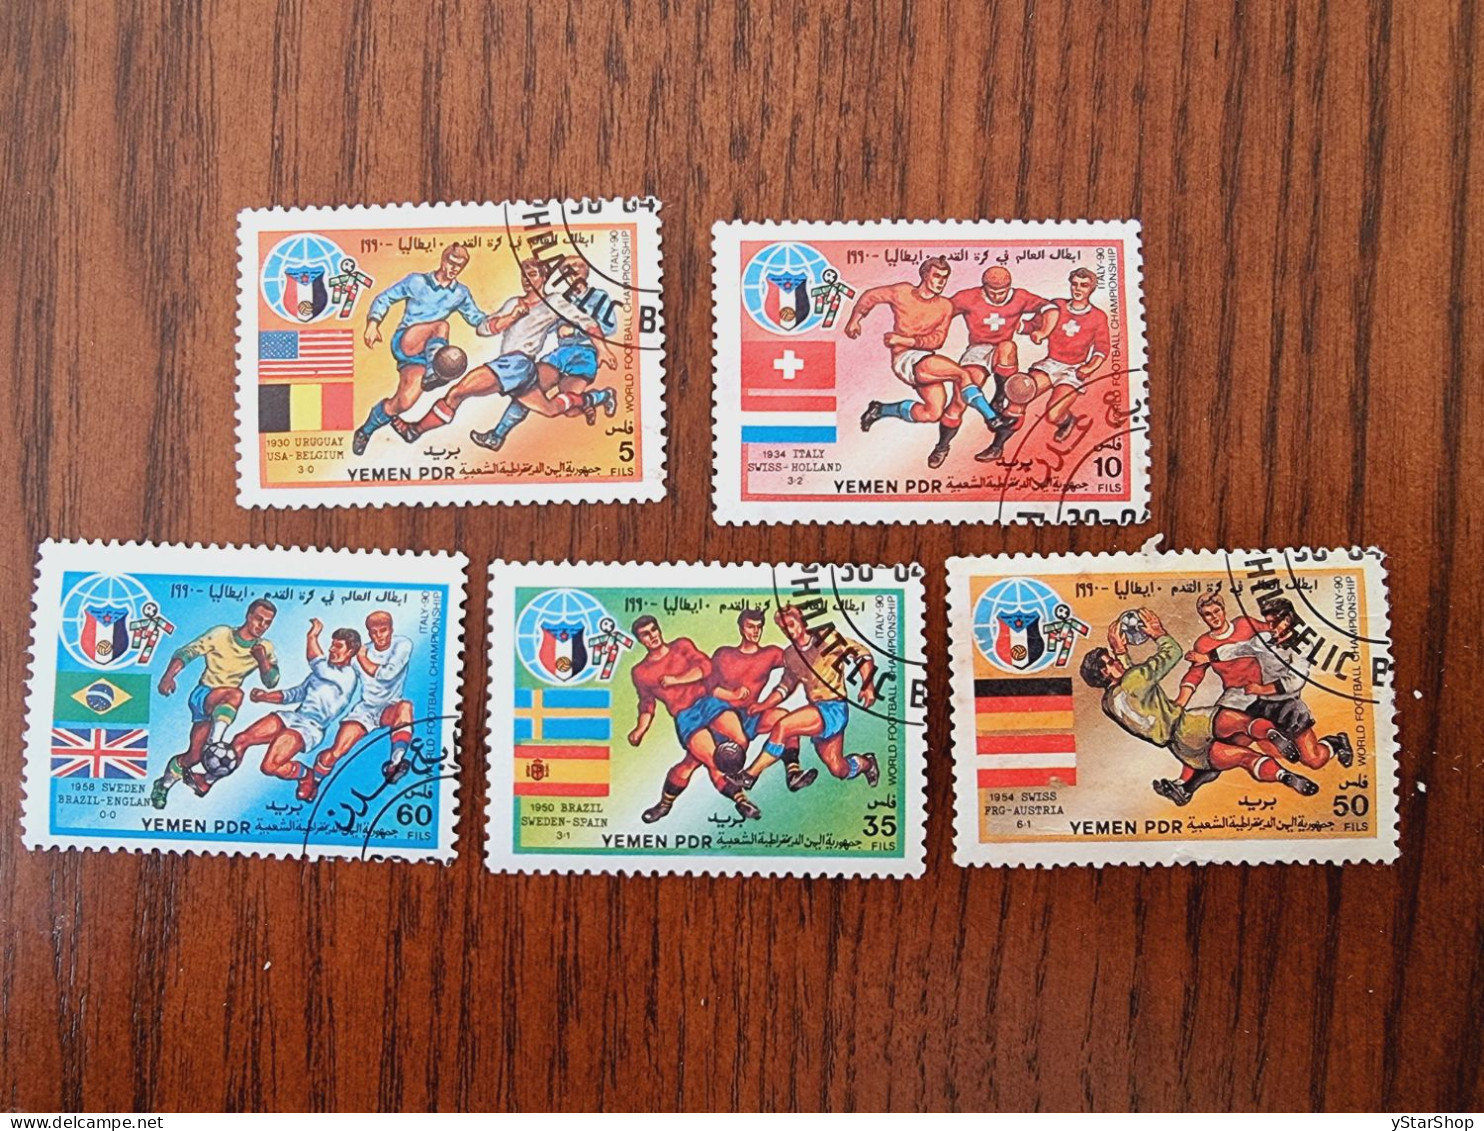 Yemen Stamps Lot - Used - FIFA Football World Cup 1990 - YE-SO 441-42, 44-46 - Jemen